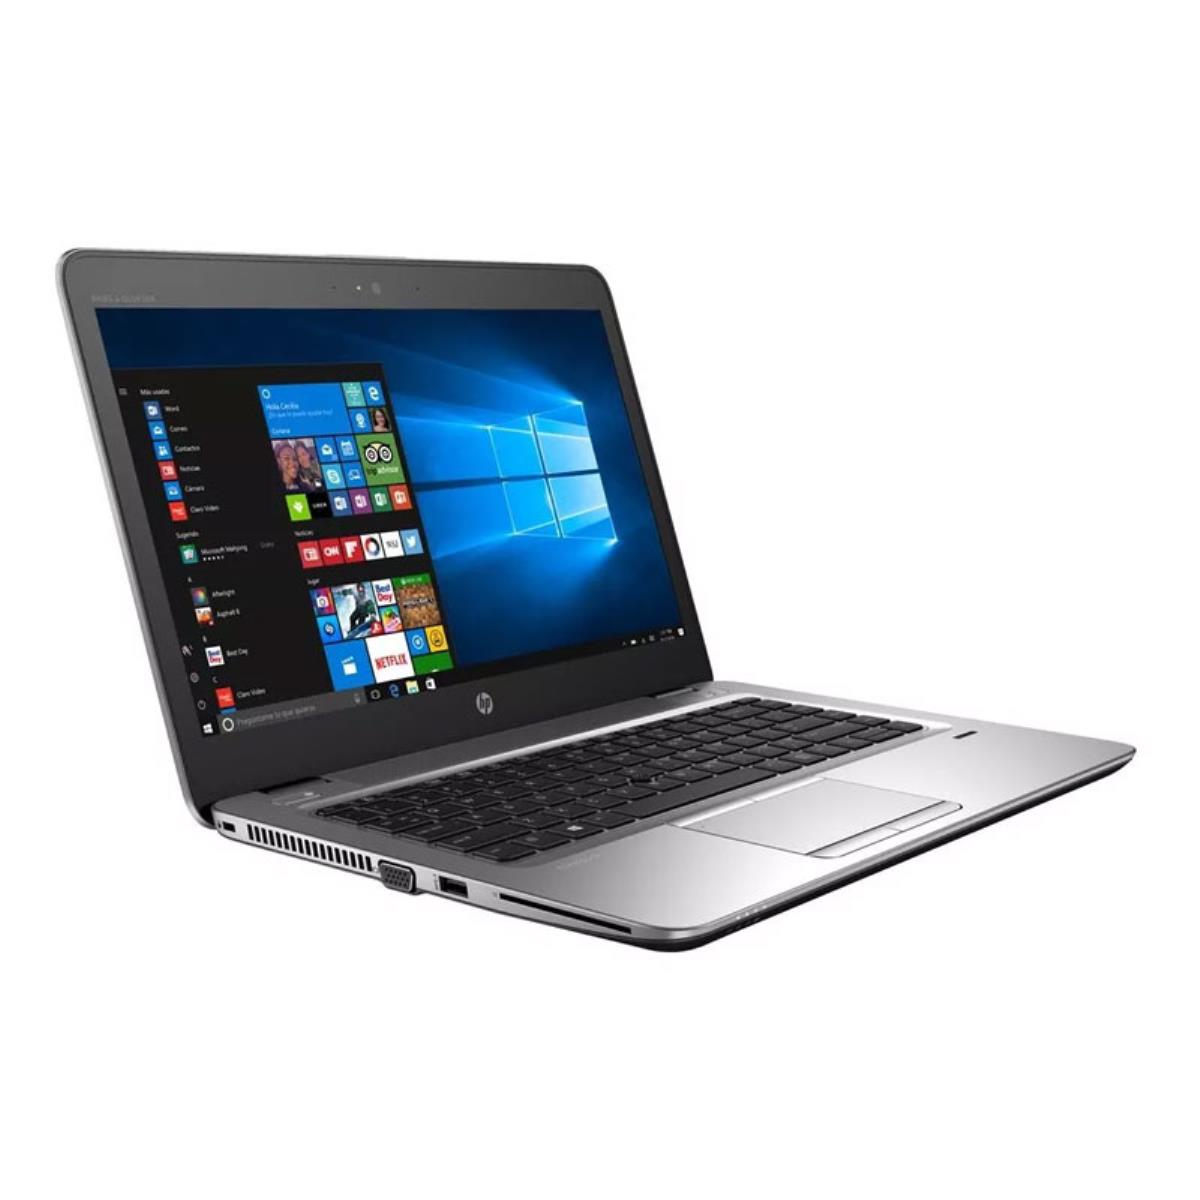 Portátil Ultrabook HP Elitebook 840 G3 GRADO B (Intel Core i7 6600U 2.6Ghz/8GB/256SSD-M.2/14FHD/NO-DVD/W10H) Preinstalado